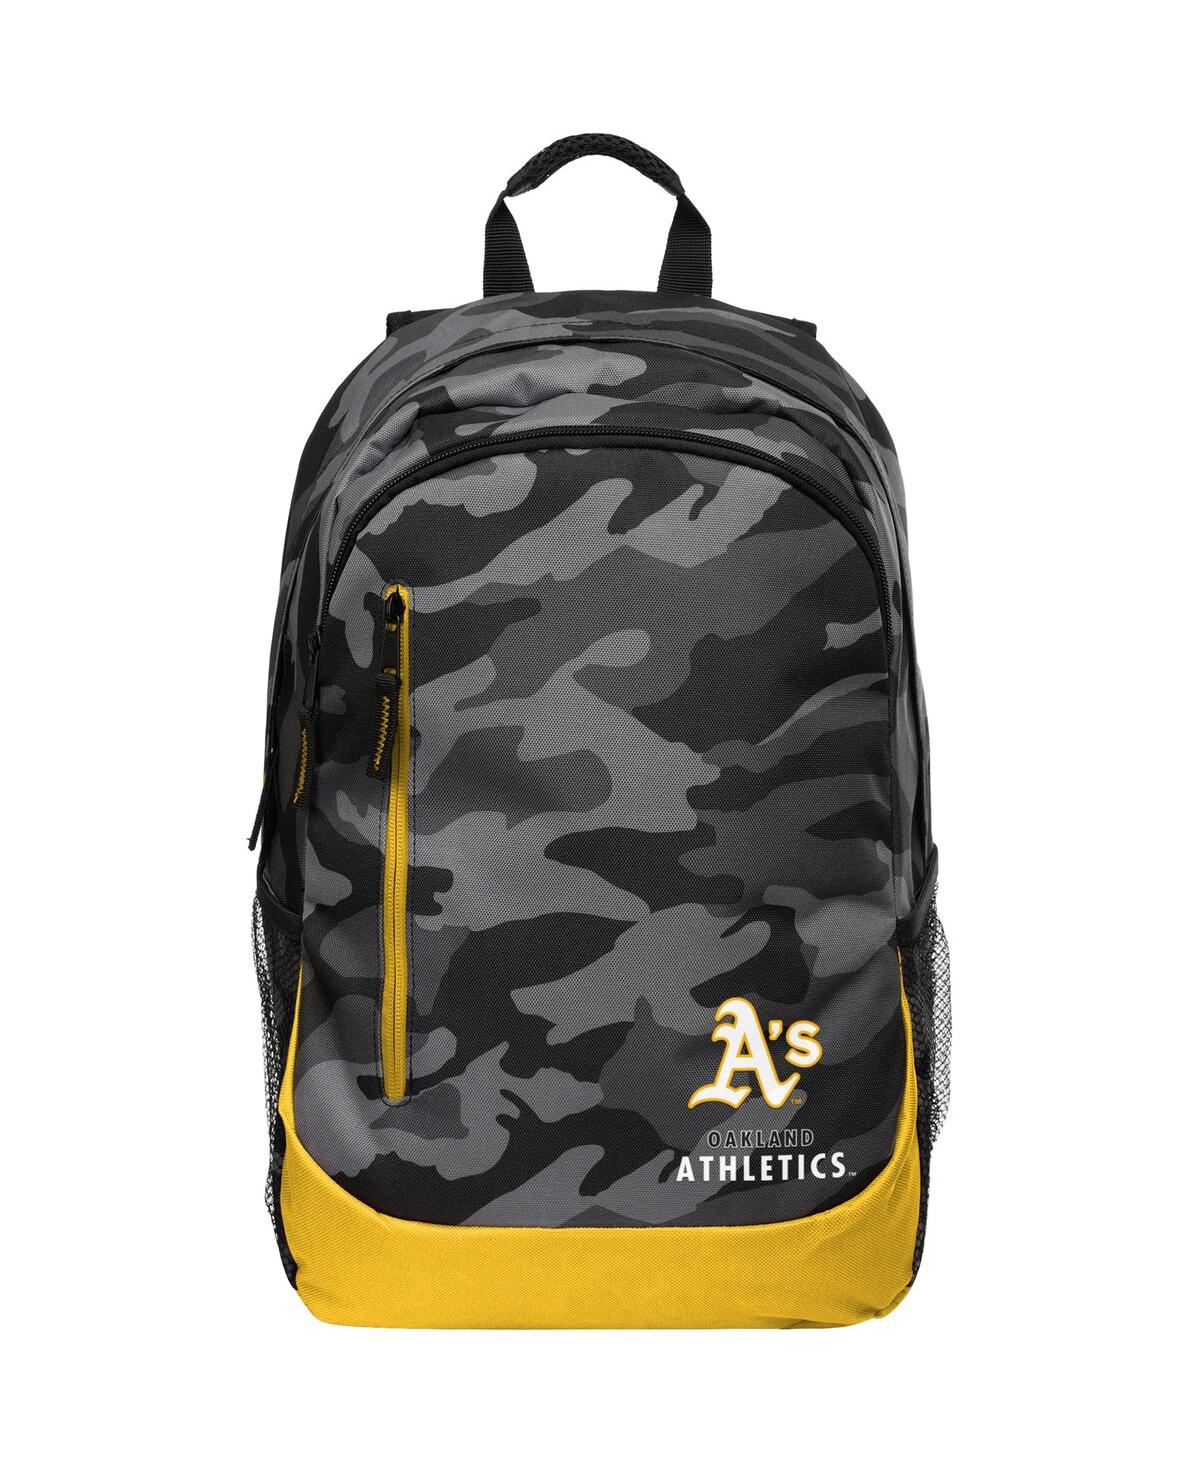 Oakland Athletics Black Camo Backpack - Black